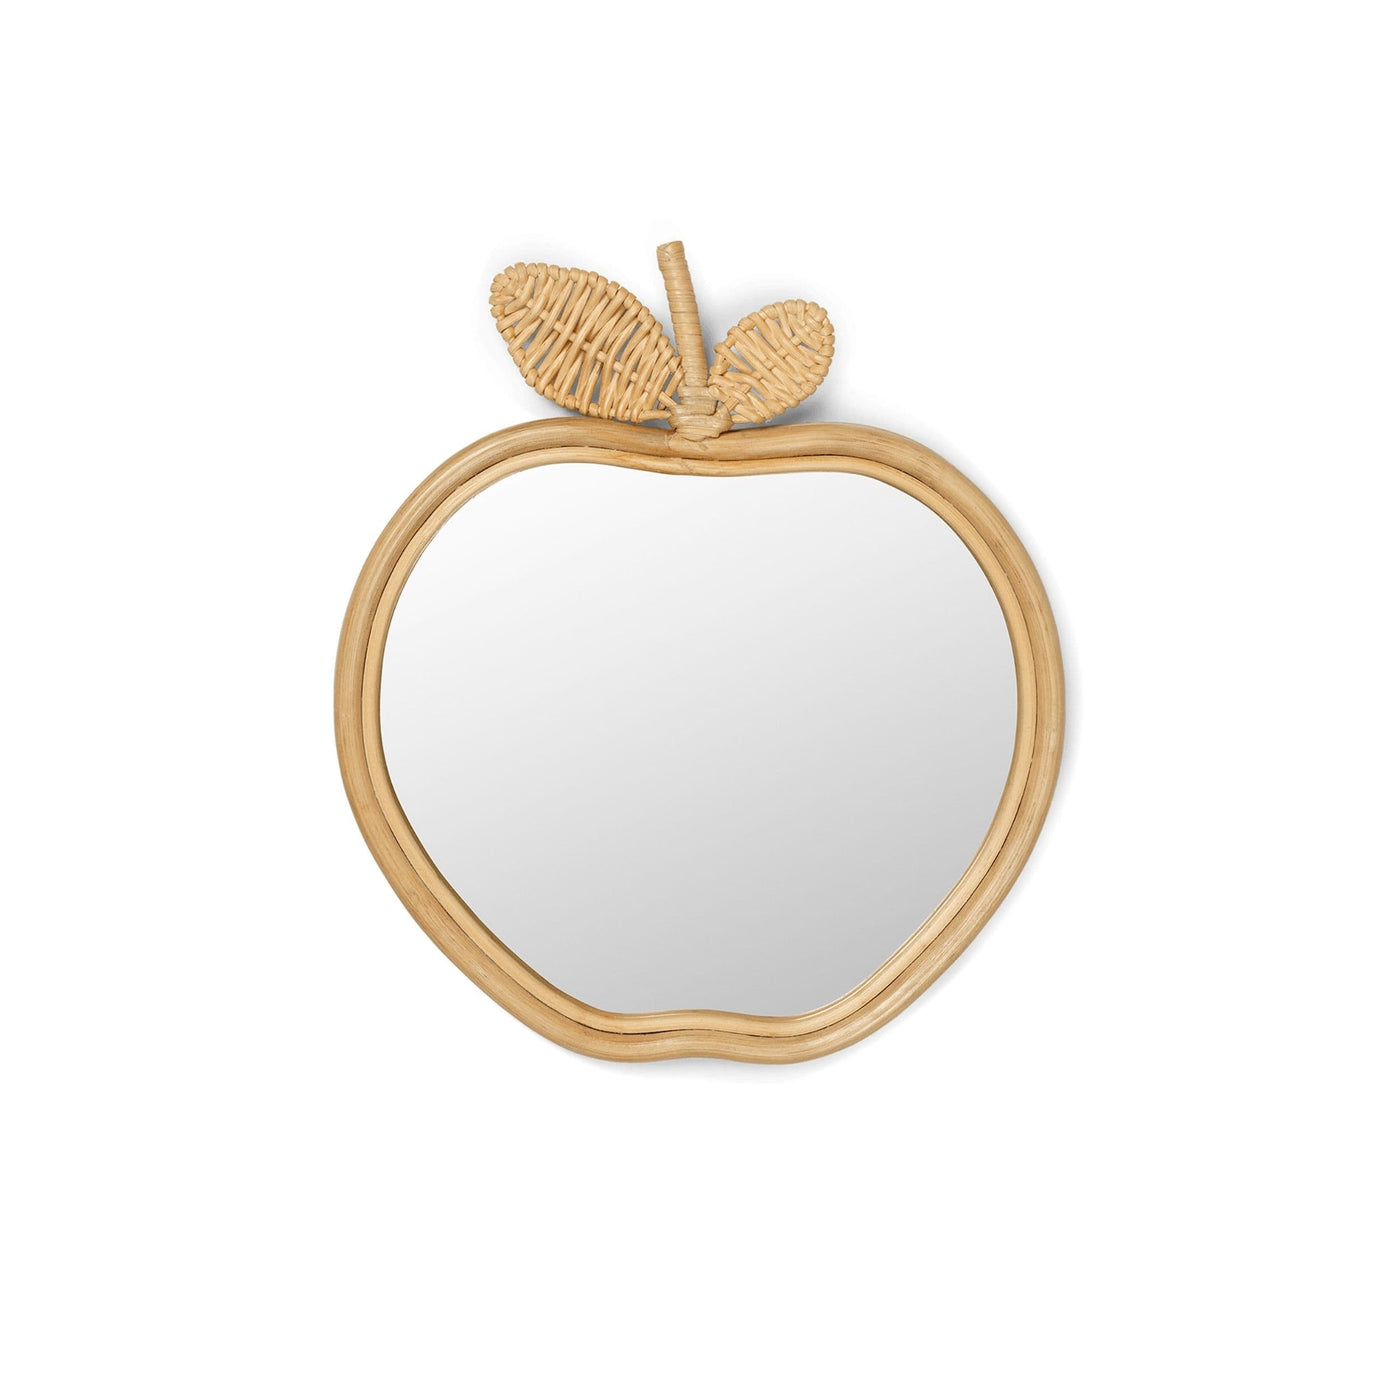 Ferm Living Apple Mirror, shop online at someday designs.